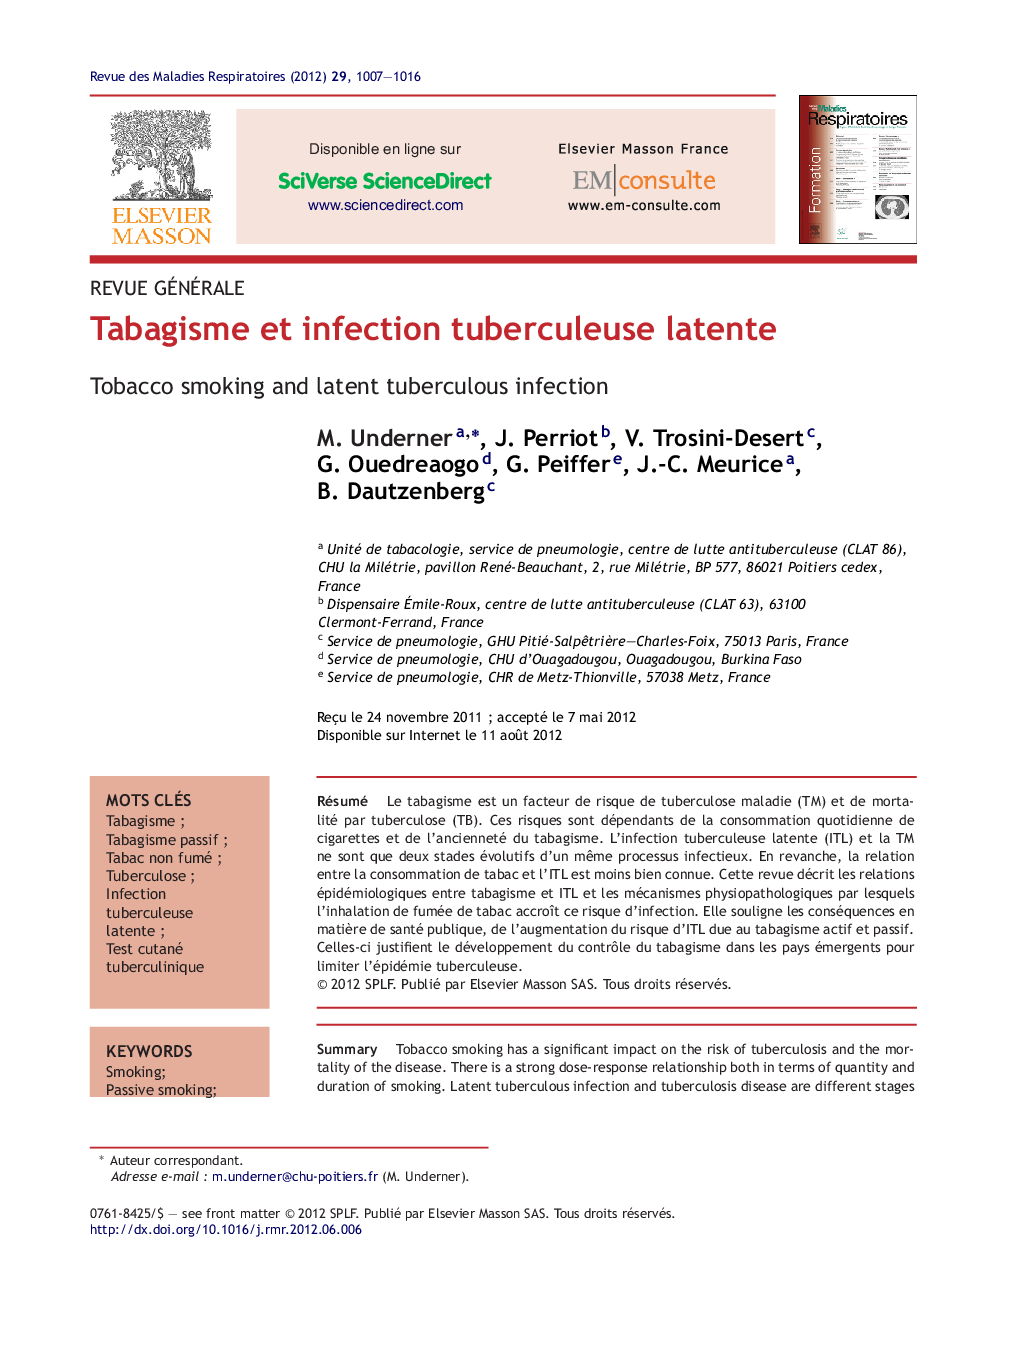 Tabagisme et infection tuberculeuse latente